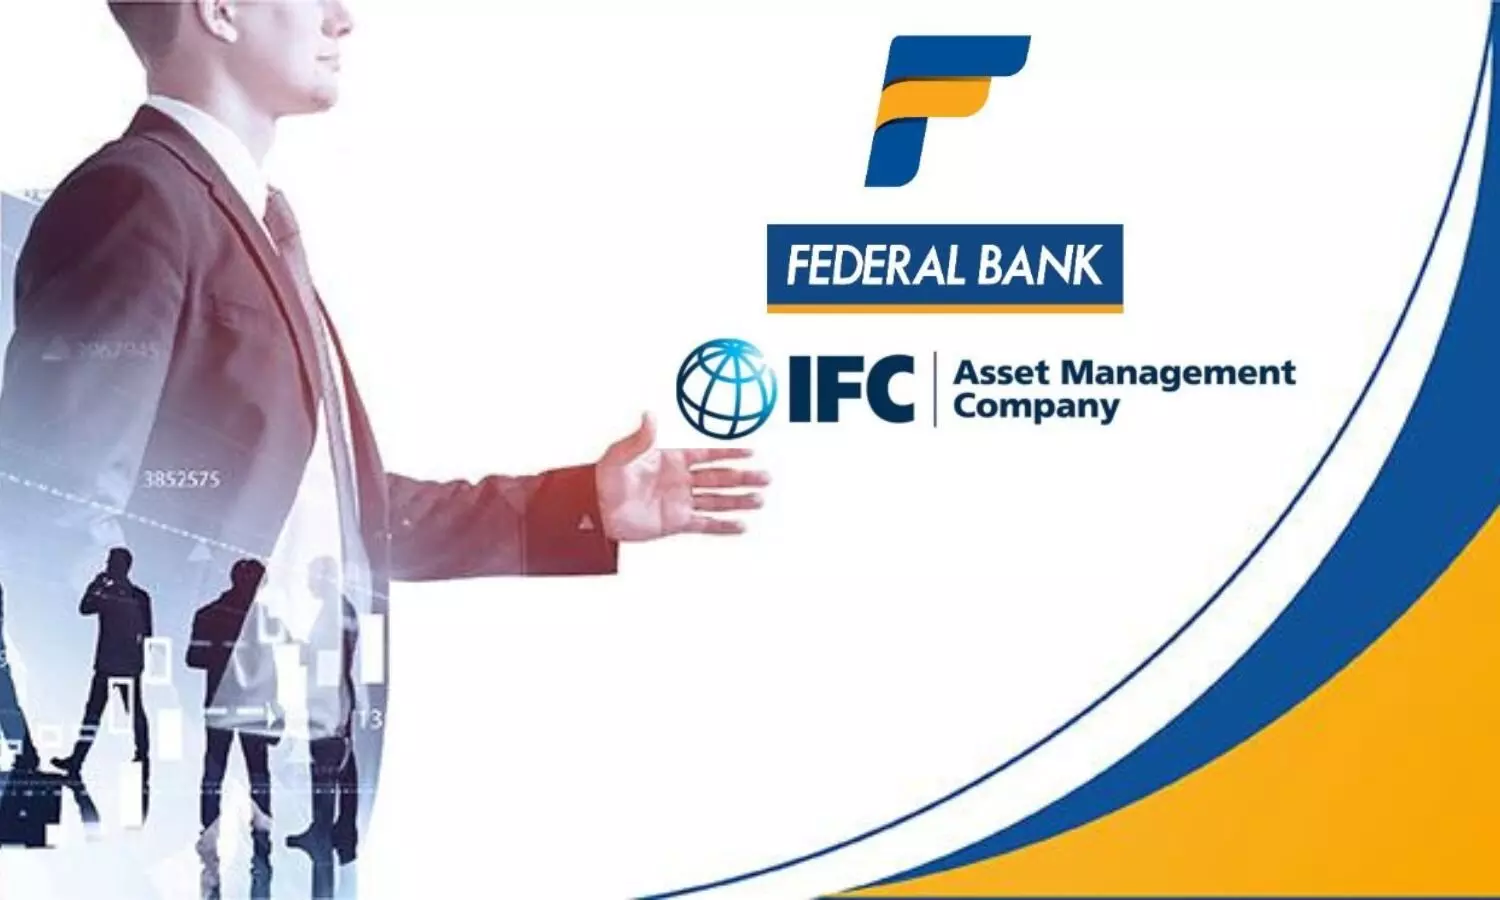 Federal Bank Logo, IFC Logo